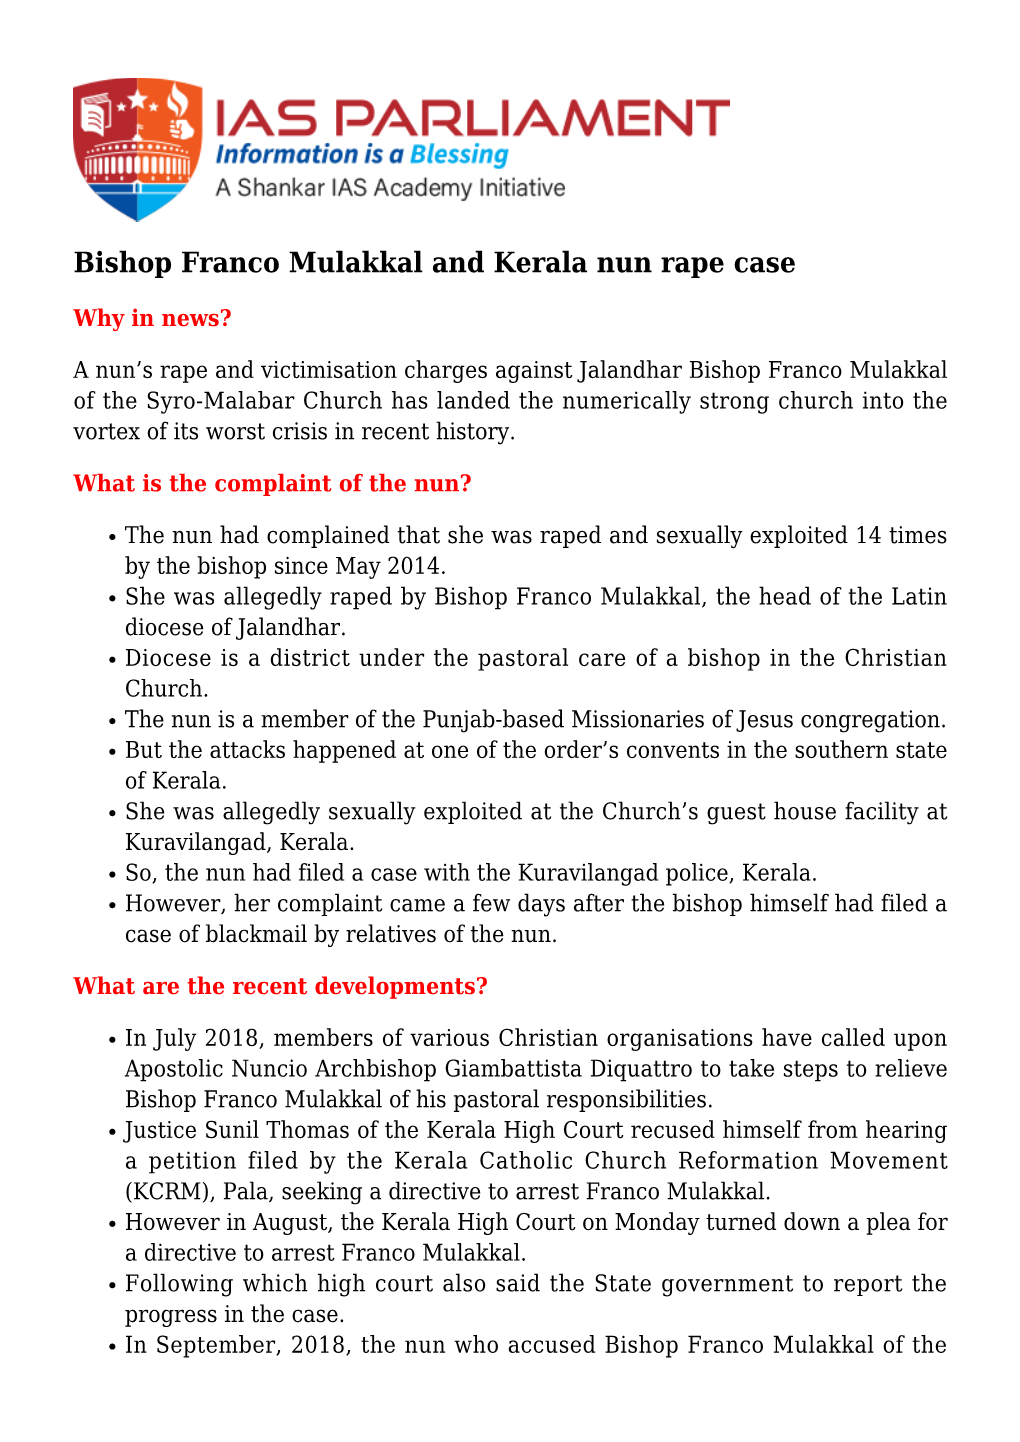 Bishop Franco Mulakkal and Kerala Nun Rape Case